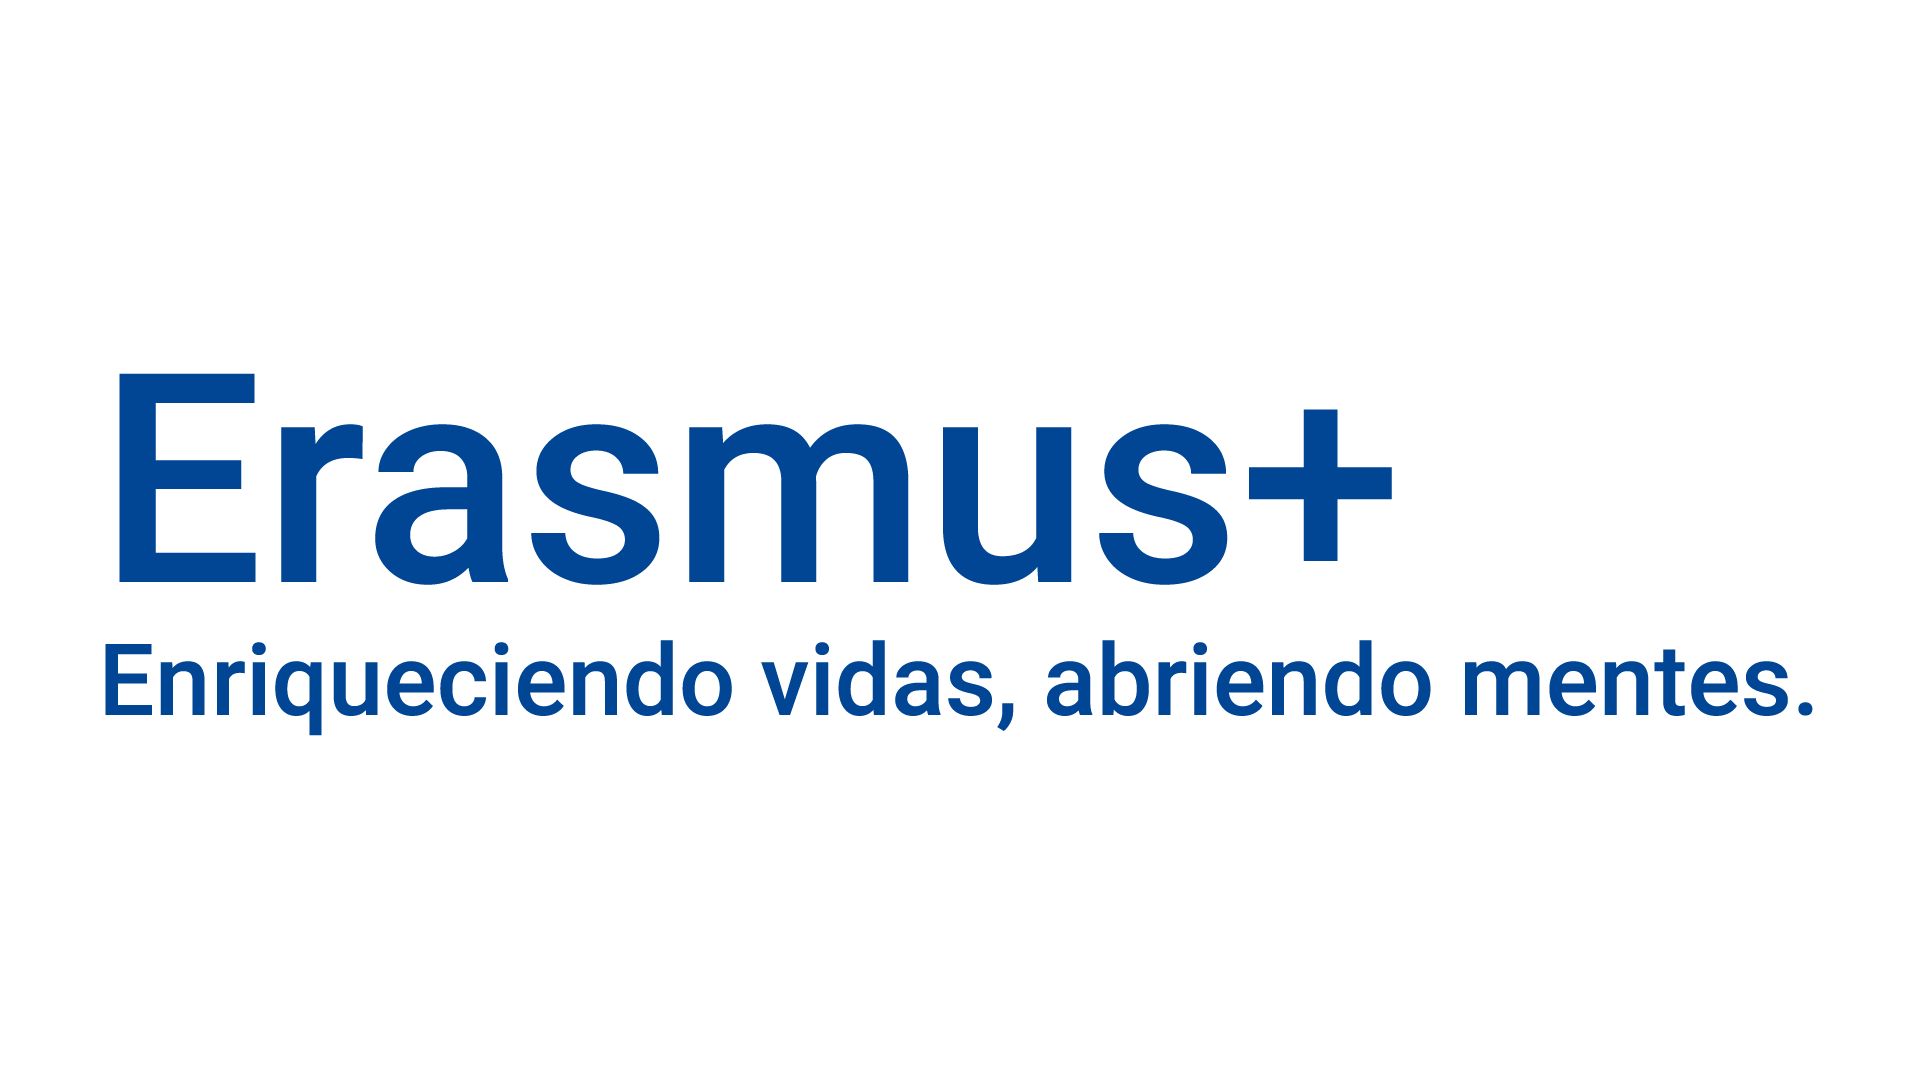 Erasmus + vidas